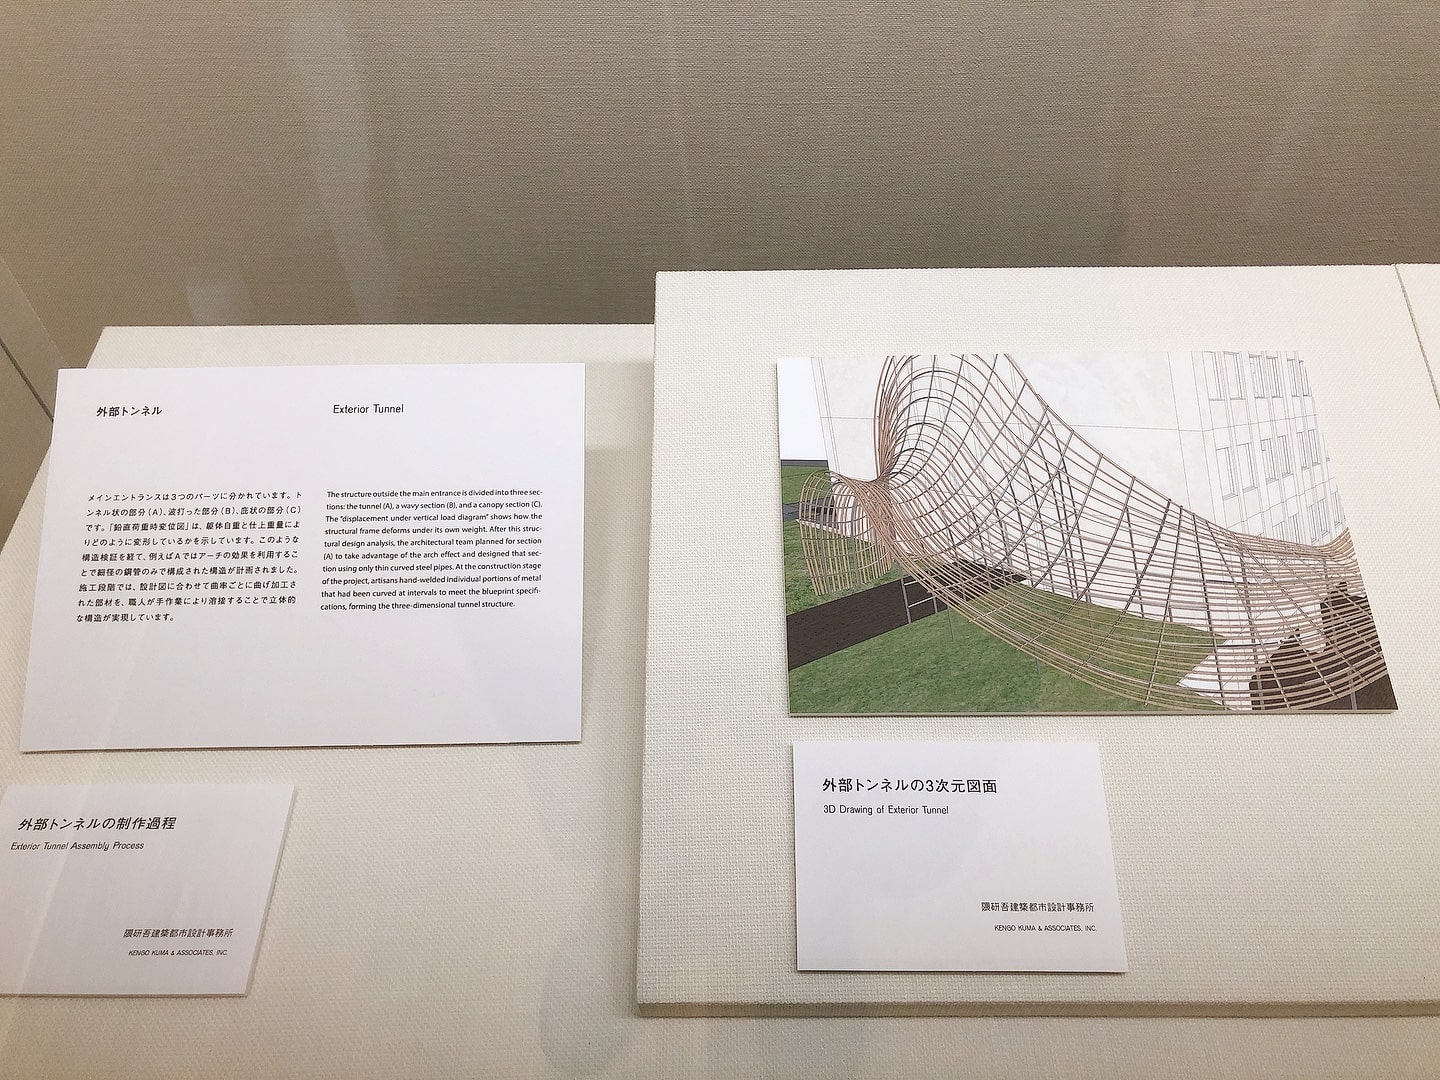 Haruki Murakami Library designed by Kengo Kuma